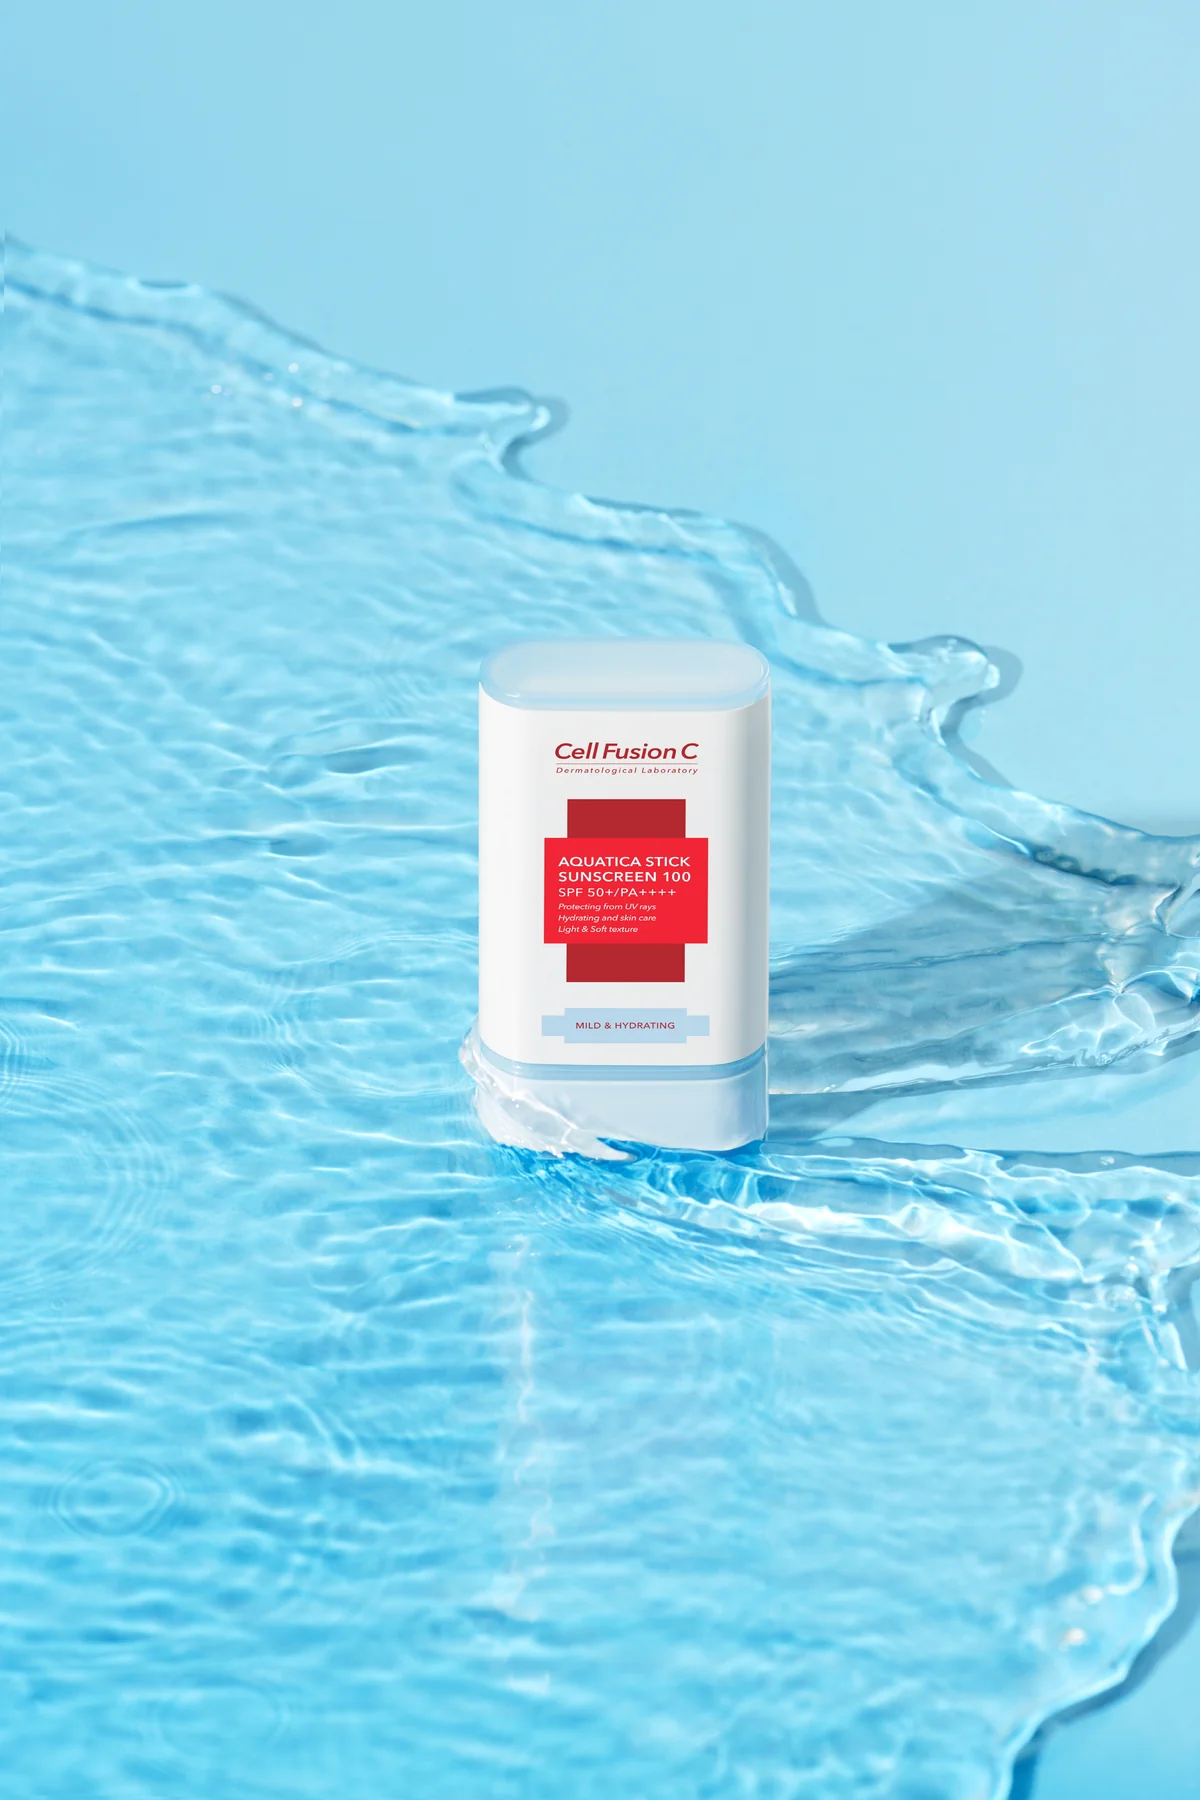 [CellFusionC] Aquatica Stick Sunscreen SPF 50+ / PA++++ - 19g